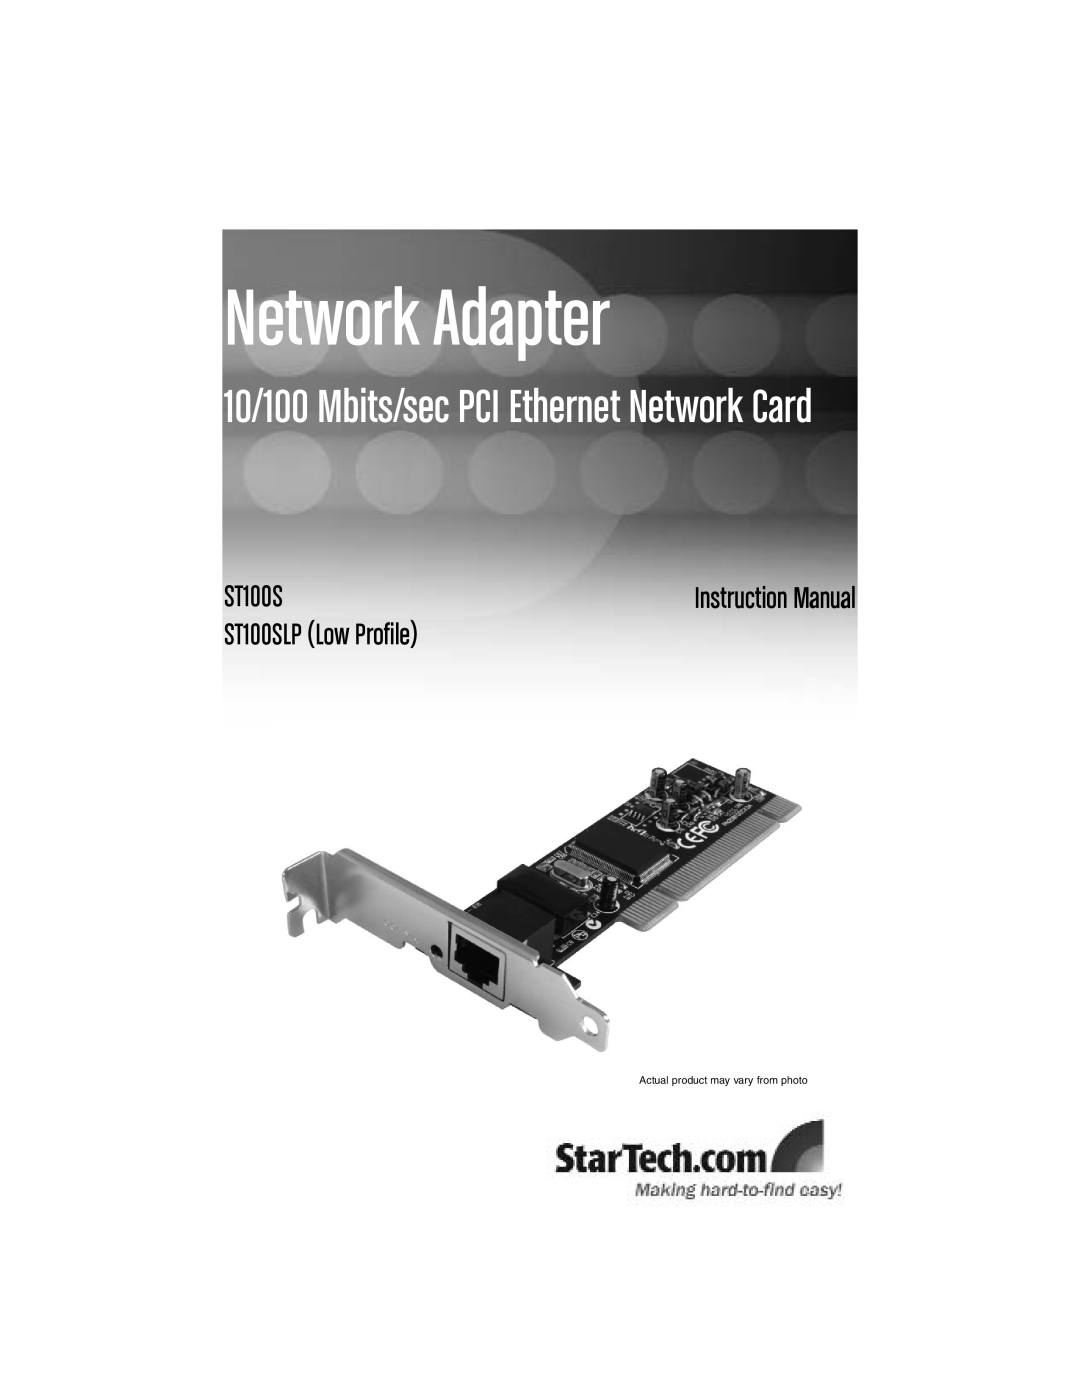 StarTech.com ST100S instruction manual Instruction Manual, Network Adapter, 10/100 Mbits/sec PCI Ethernet Network Card 